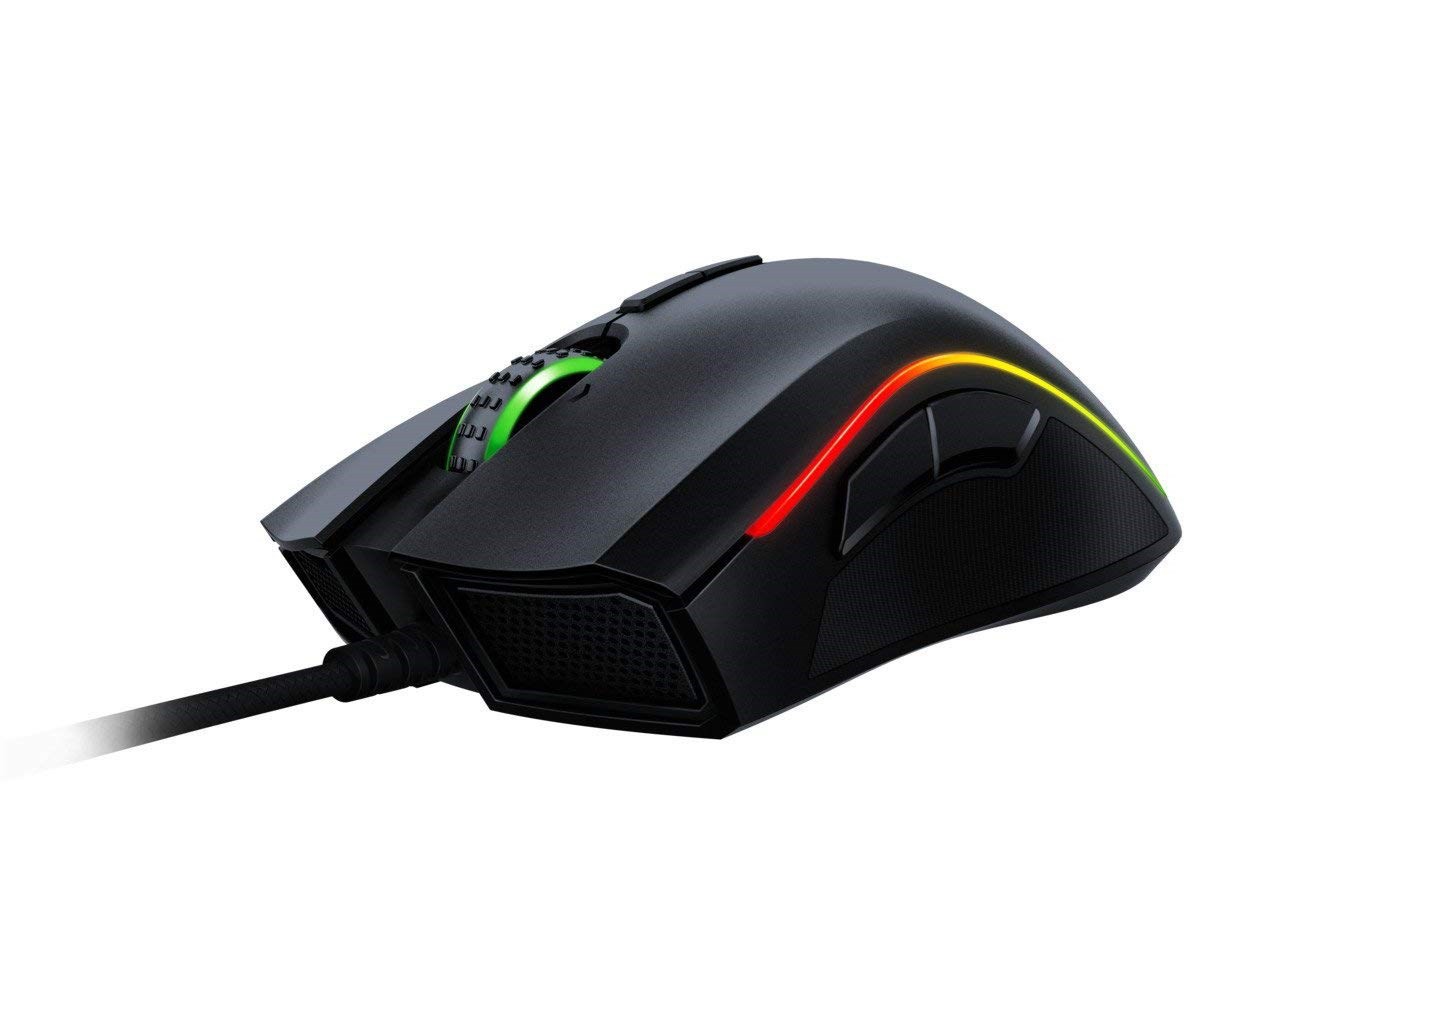 RAZER Viper black gaming mouse